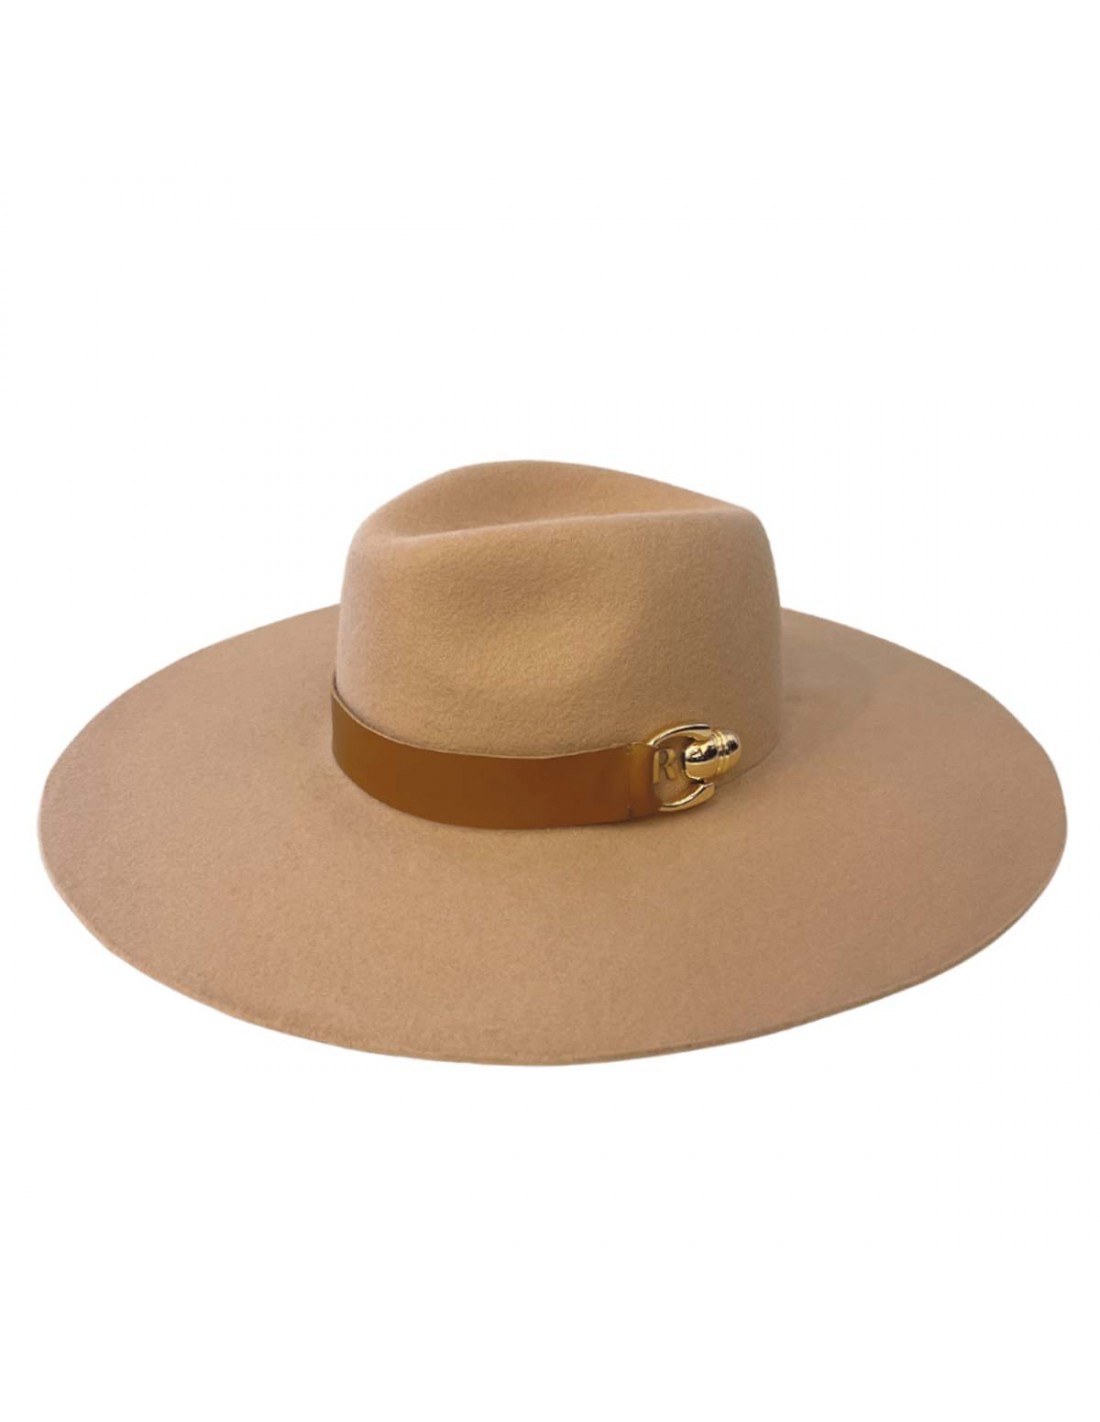 Shop Women's Wide Brim Wool Felt Cappuccino Hat - Boston - Raceu Hats